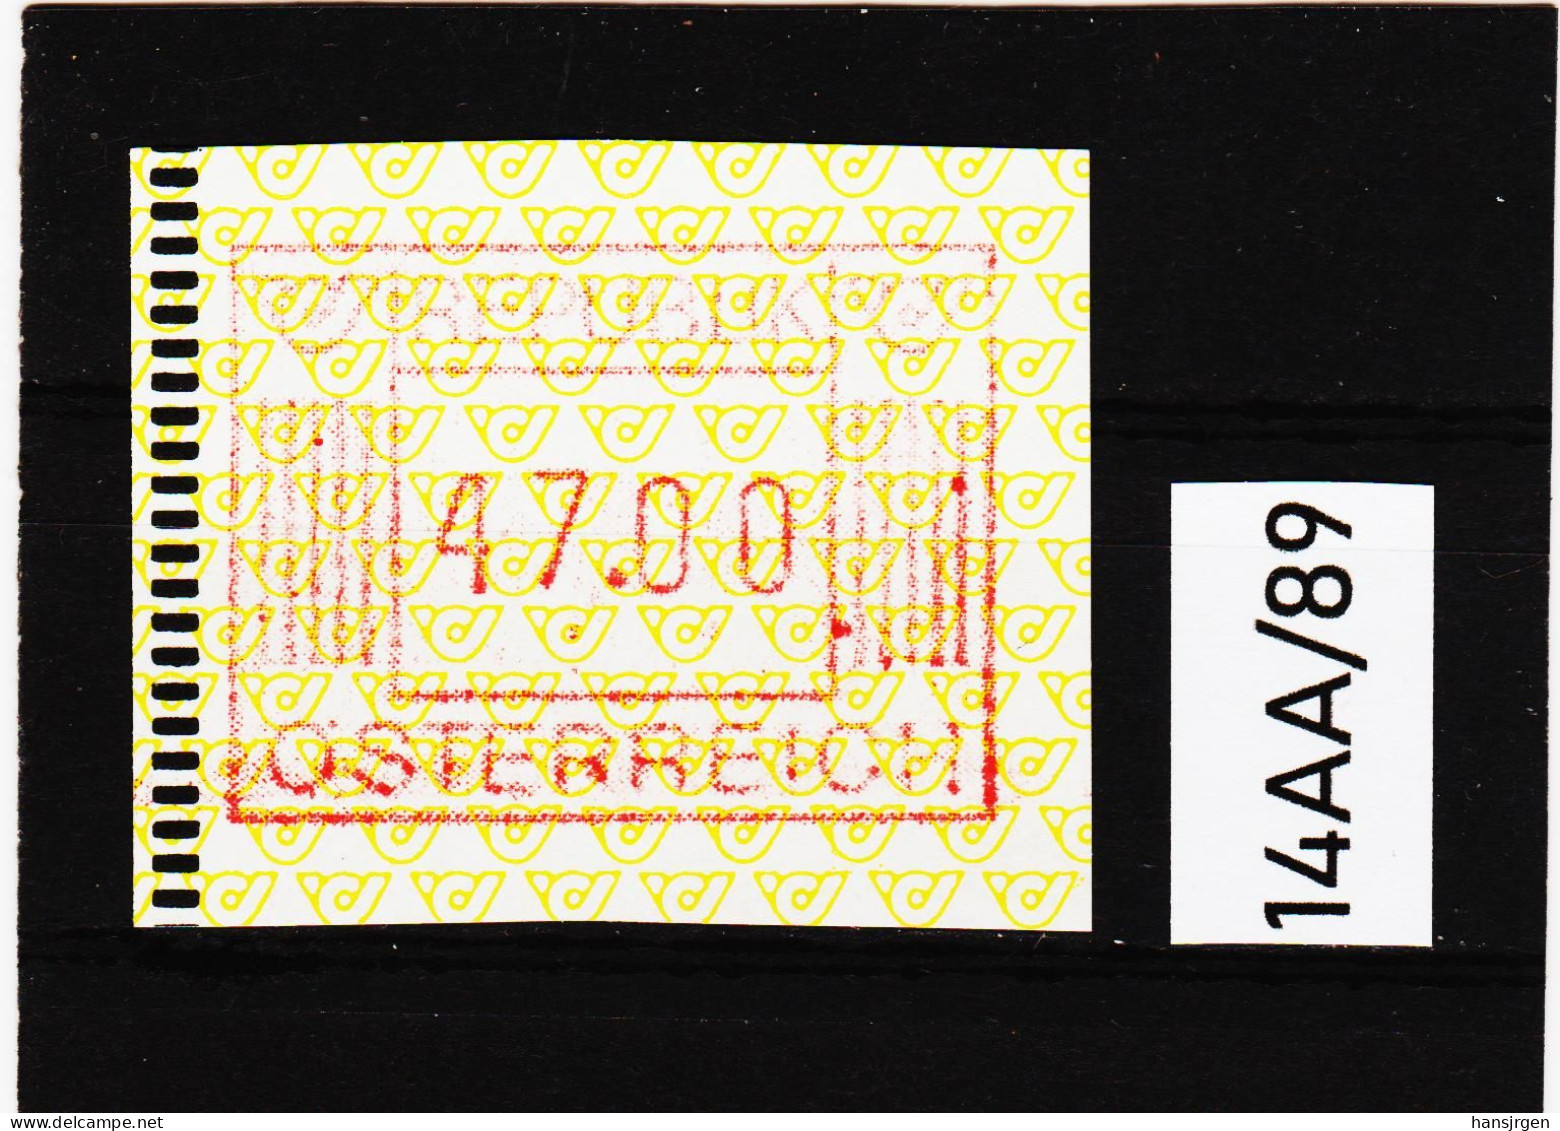 14AA/89  ÖSTERREICH 1983 AUTOMATENMARKEN 1. AUSGABE  47,00 SCHILLING   ** Postfrisch - Timbres De Distributeurs [ATM]